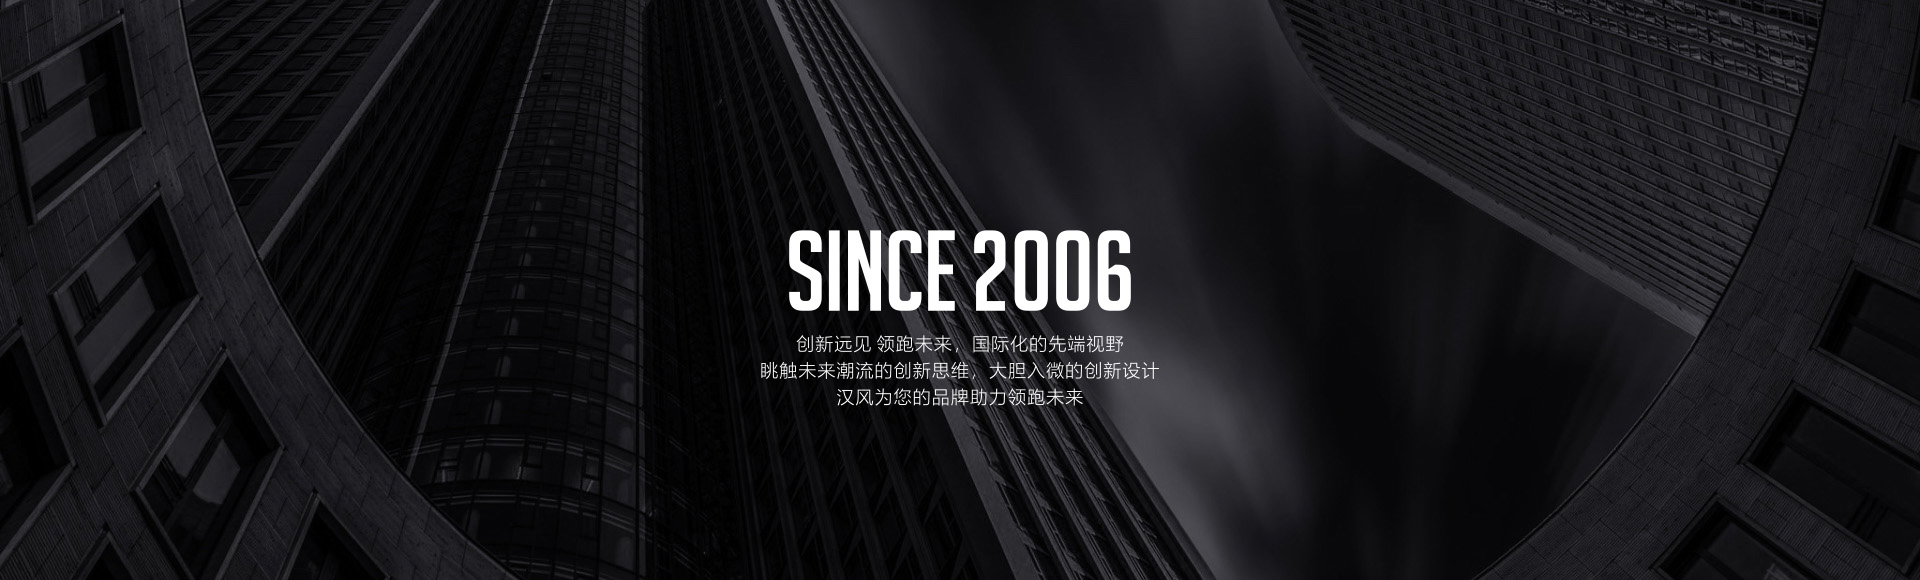 PC端网站关于汉风栏目banner